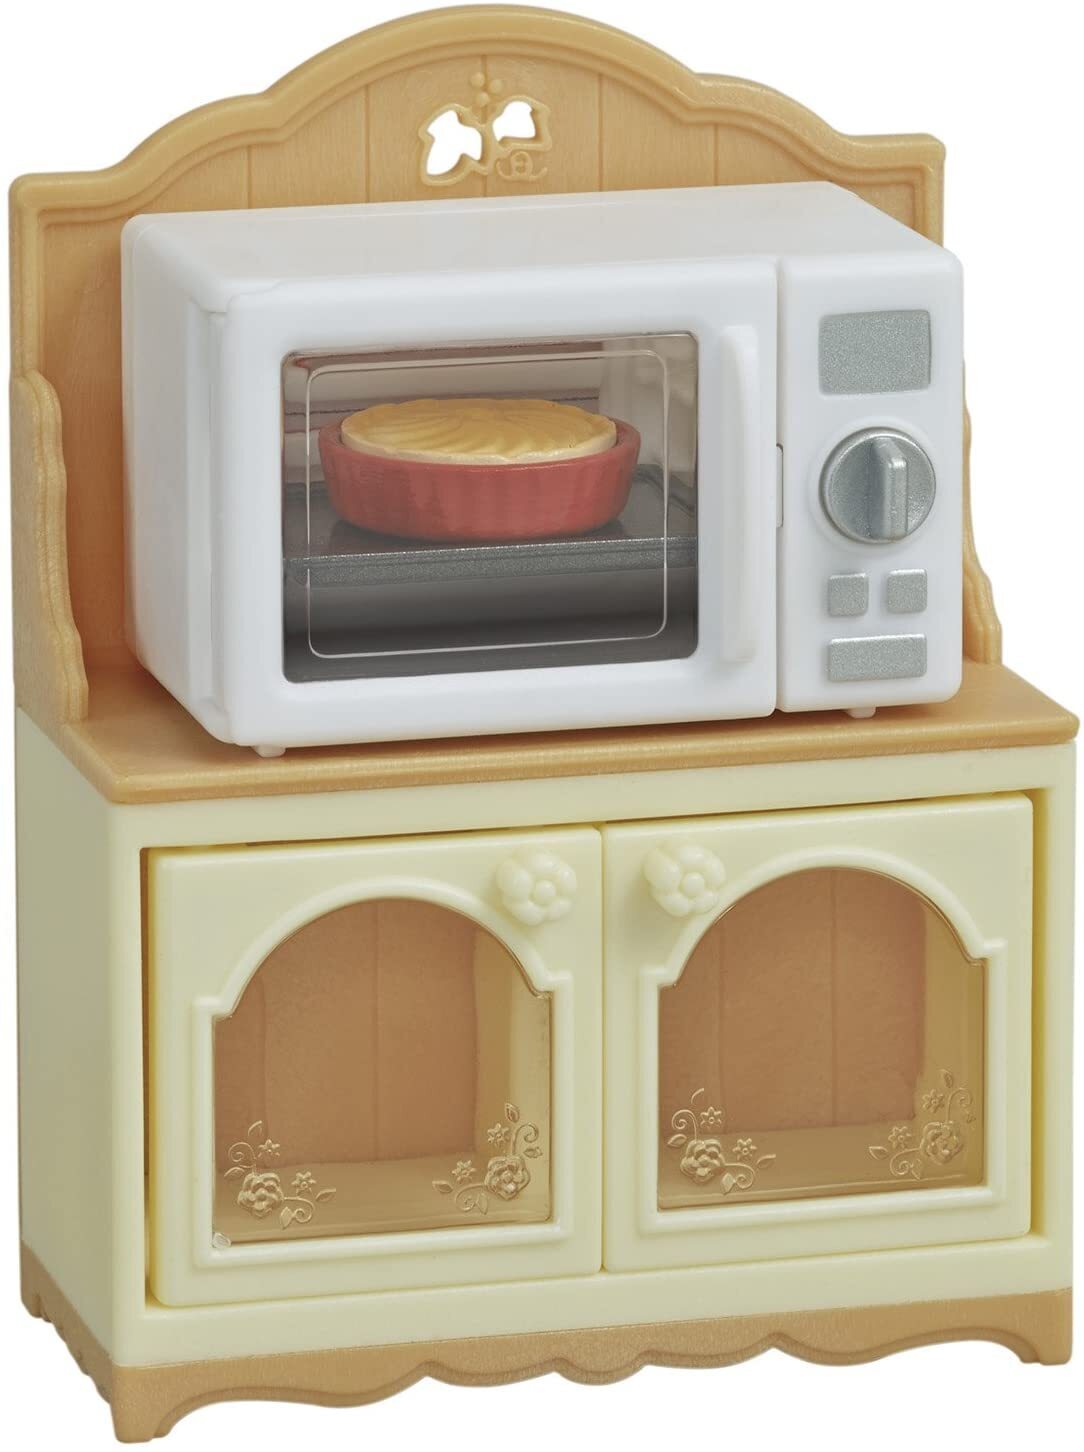 Sylvanian Families 5443 Microwave Cabinet